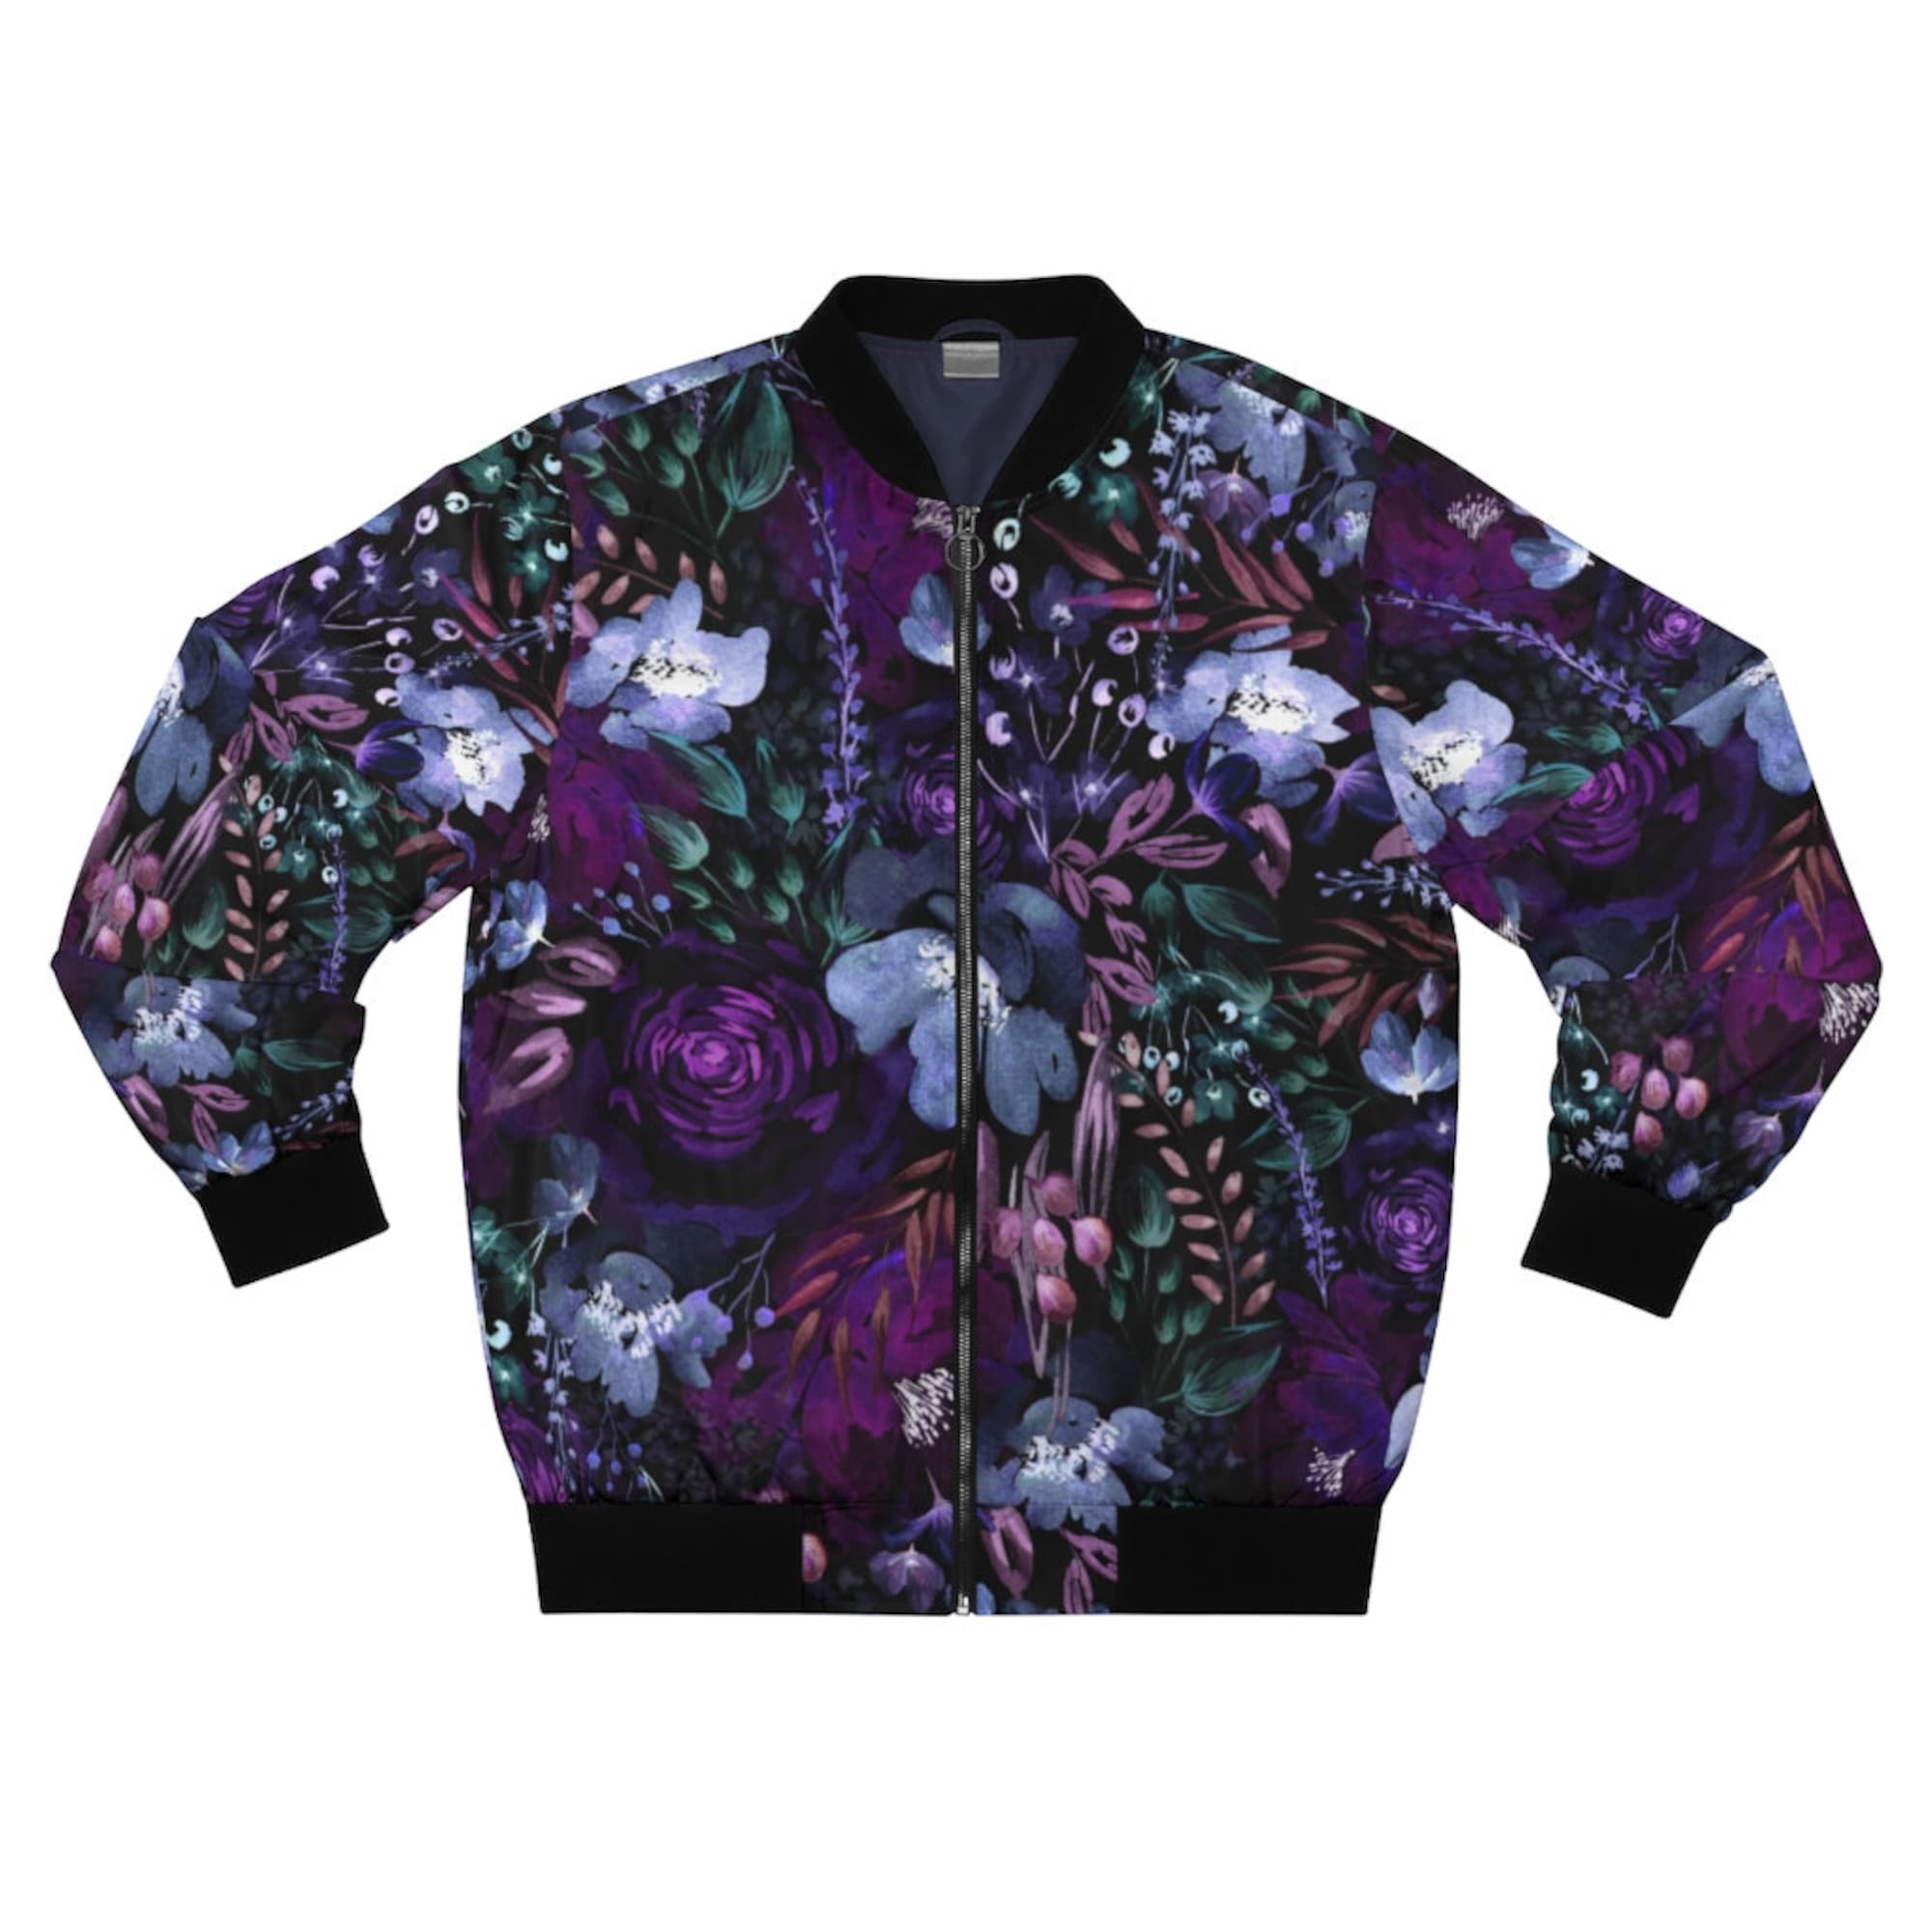 Bue Floral Bomber Jacket Unisex Black clothing Floral pattern Violet Flowers Fashion